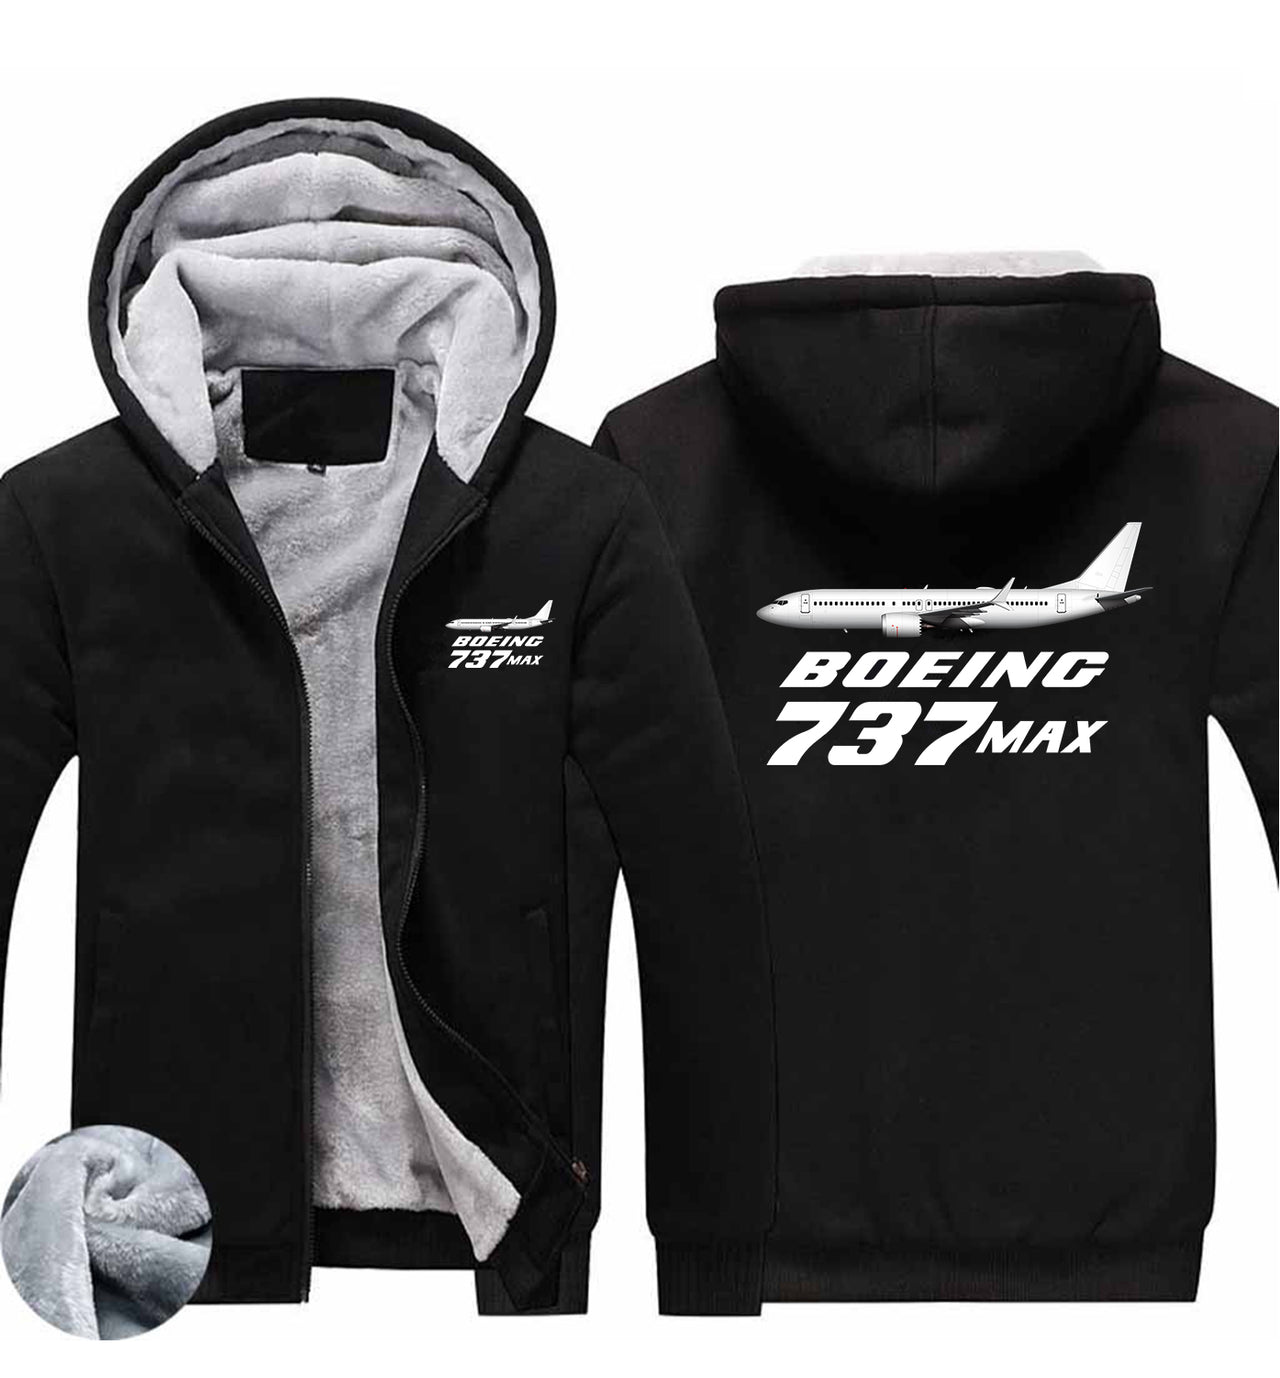 The Boeing 737Max Designed Zipped Sweatshirts